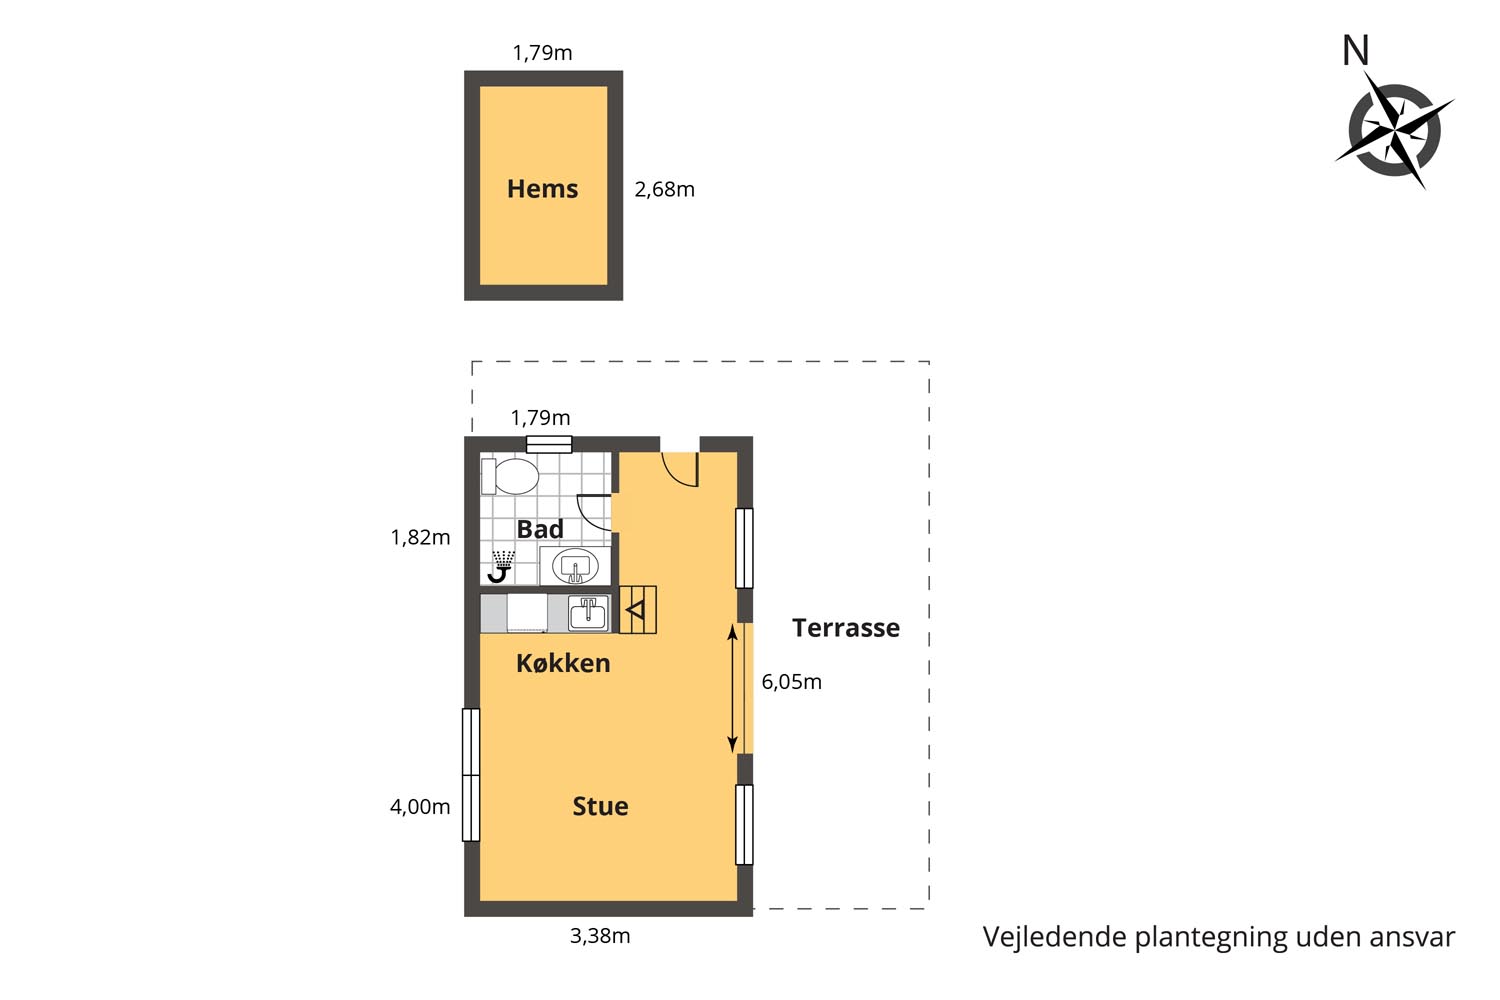 Zigna Visual 2D Floor Plan template designed by Farbod Torabi.